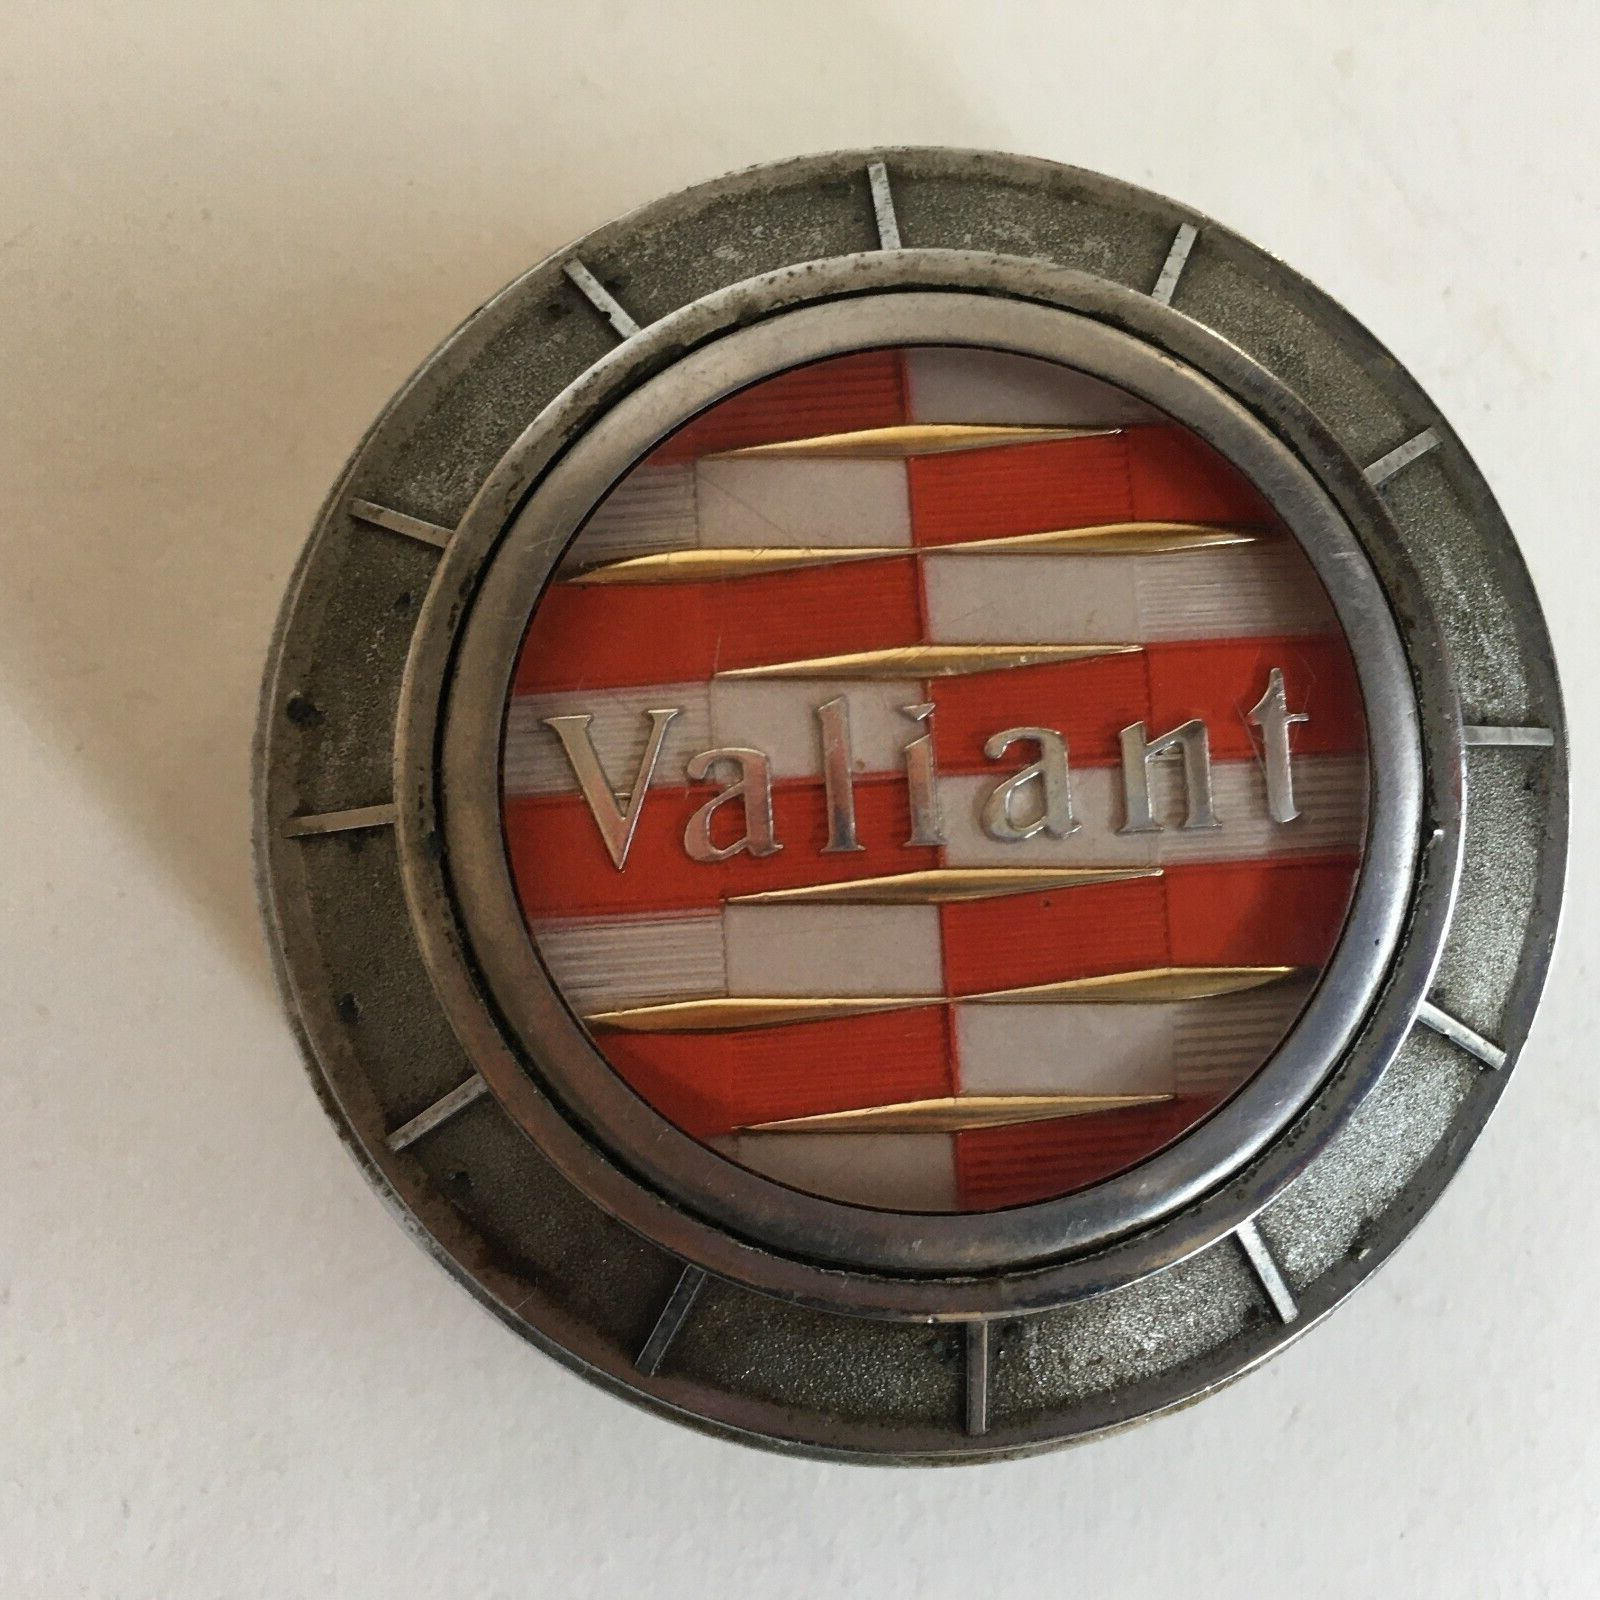 Valiant Wheel Center Cap Vintage Original Plymouth